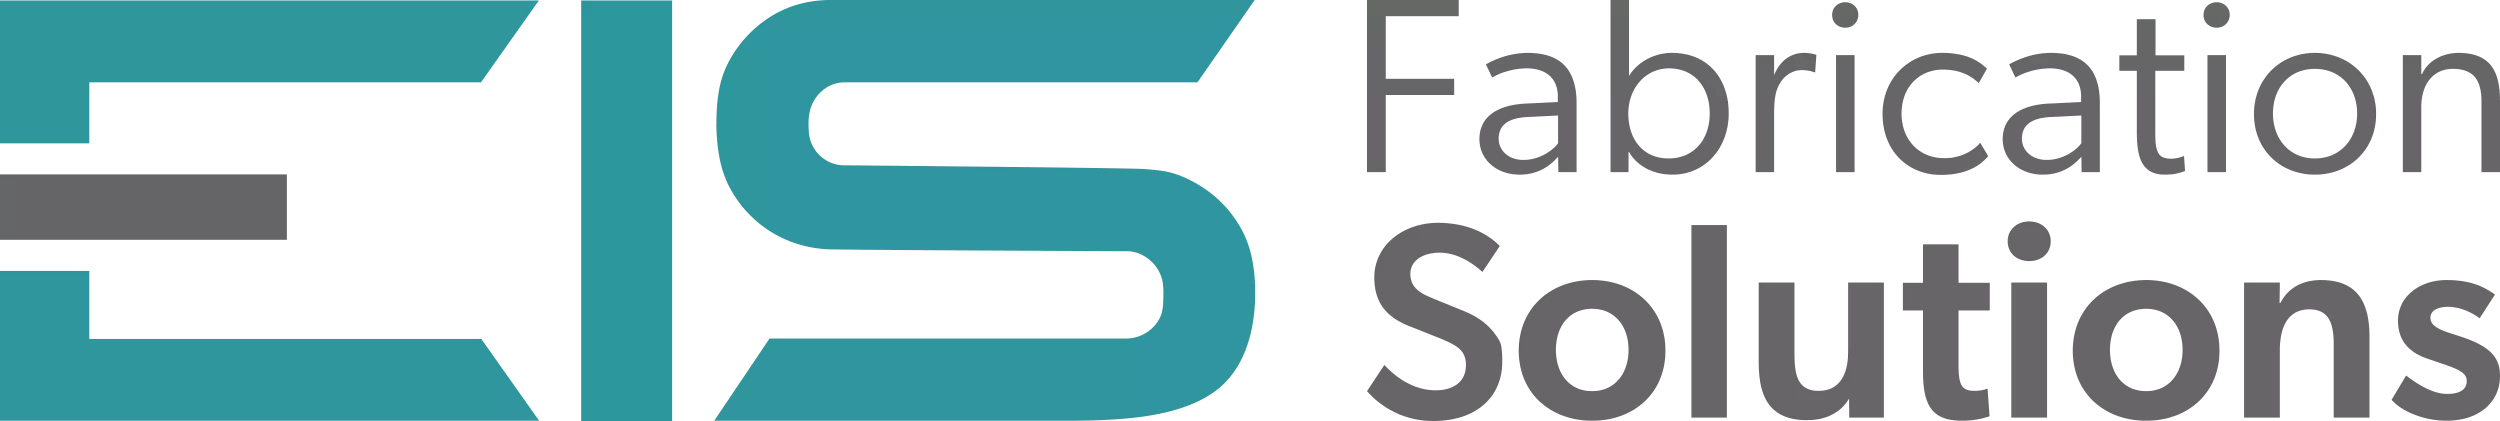 EIS Fabrication Solutions logo